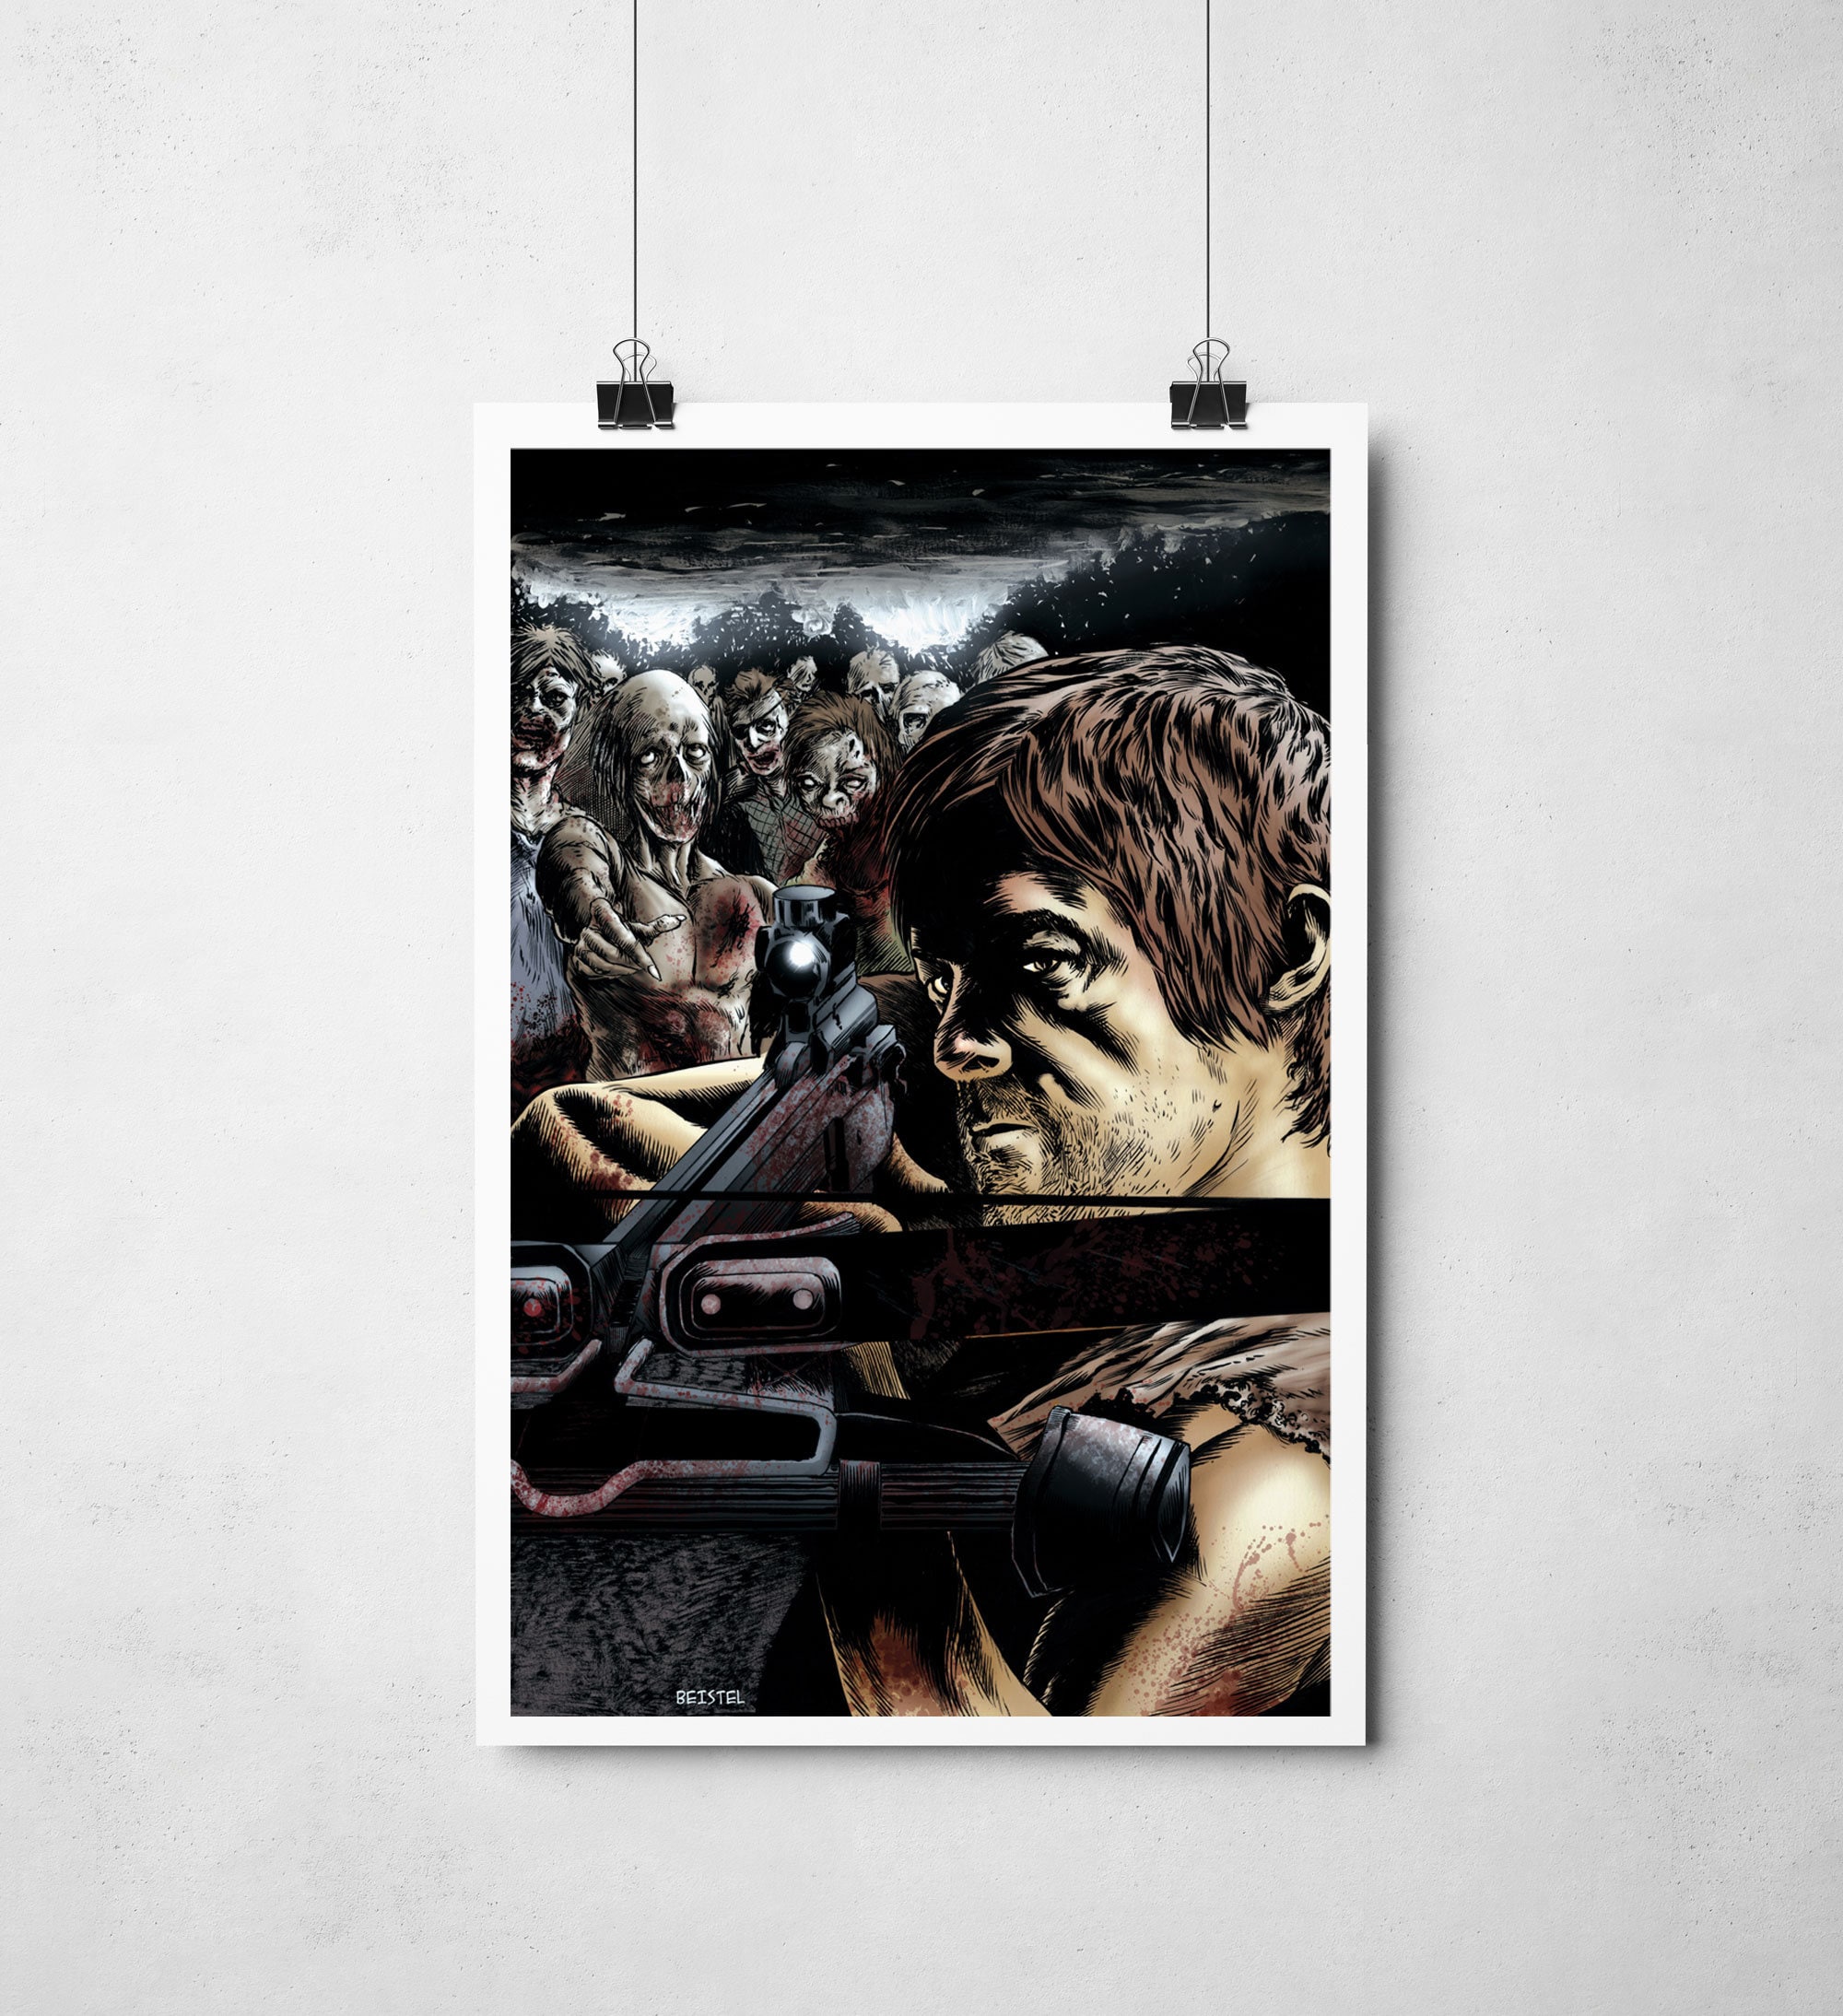 The Walking Dead Poster, Printable Download, Walking Dead